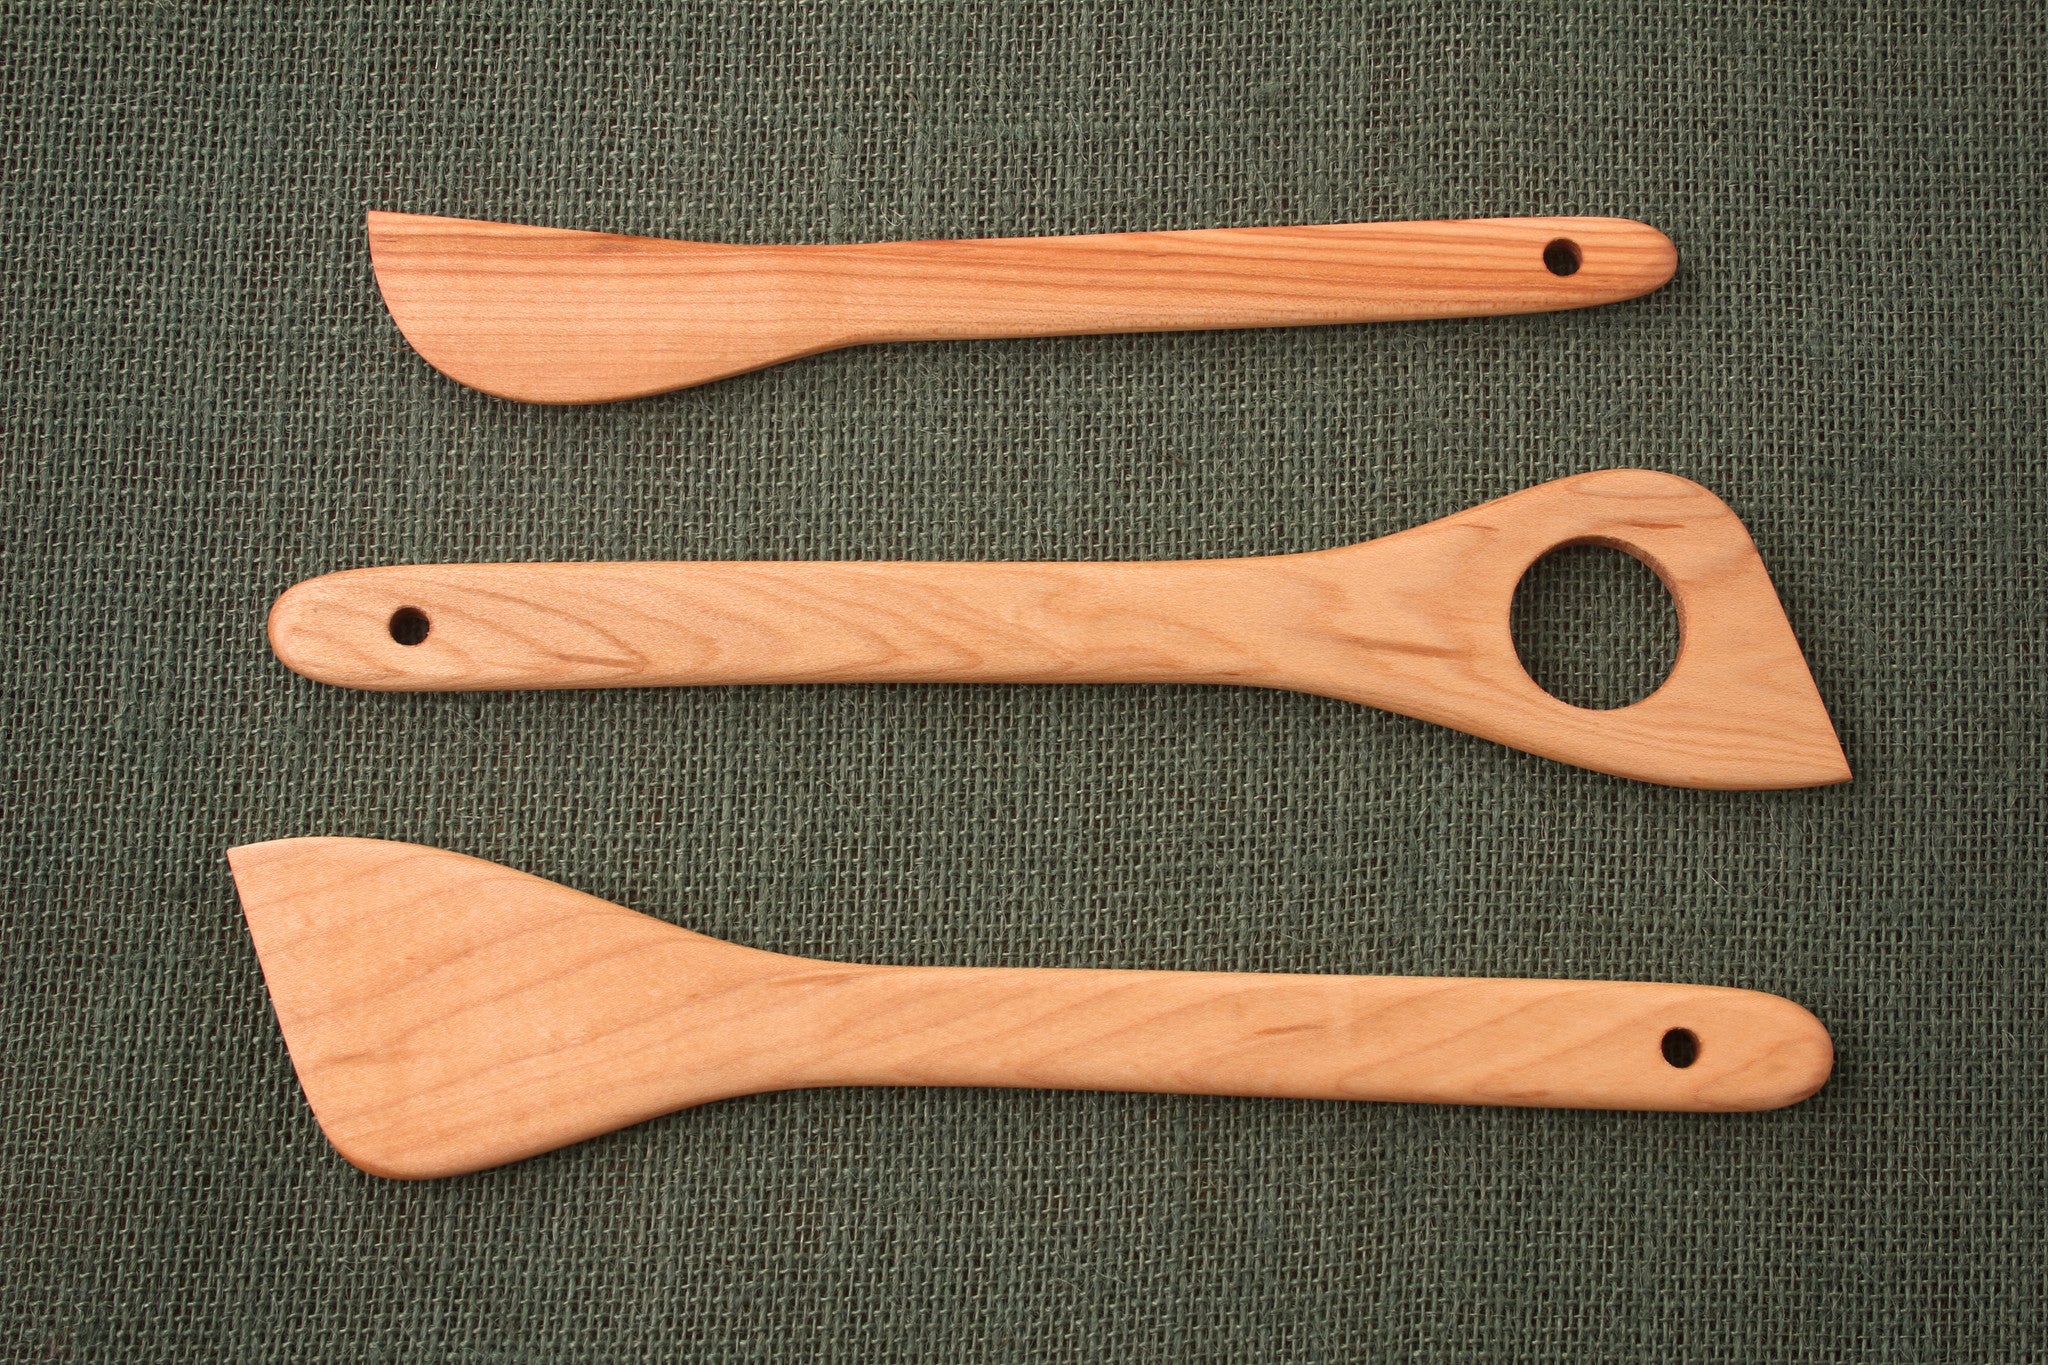 Navaris Left Handed Spatula Set (3 Pieces) - Wood Lefty Turner Spatulas for  Cooking - Kitchen Utensi…See more Navaris Left Handed Spatula Set (3